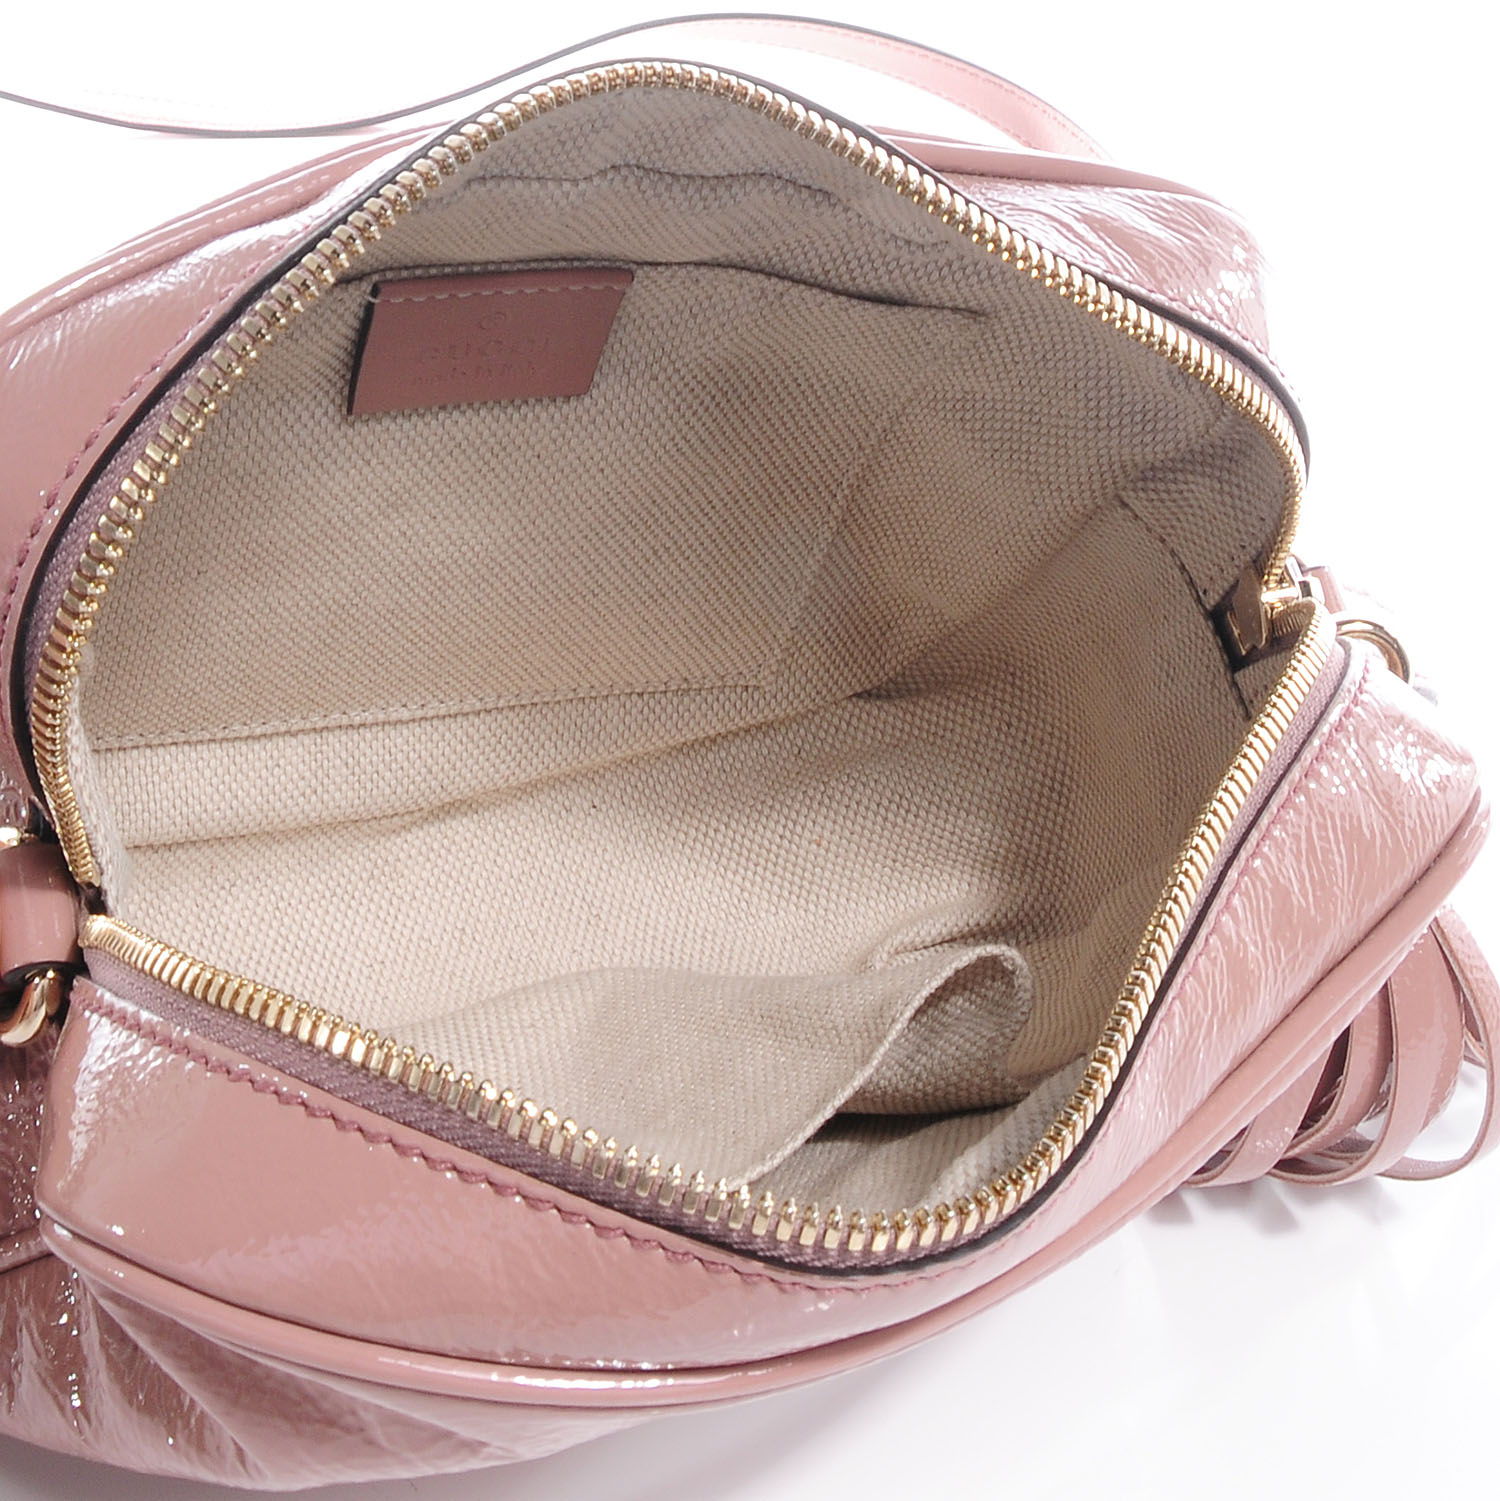 GUCCI Soft Patent Small Soho Disco Bag Blush Pink 61655